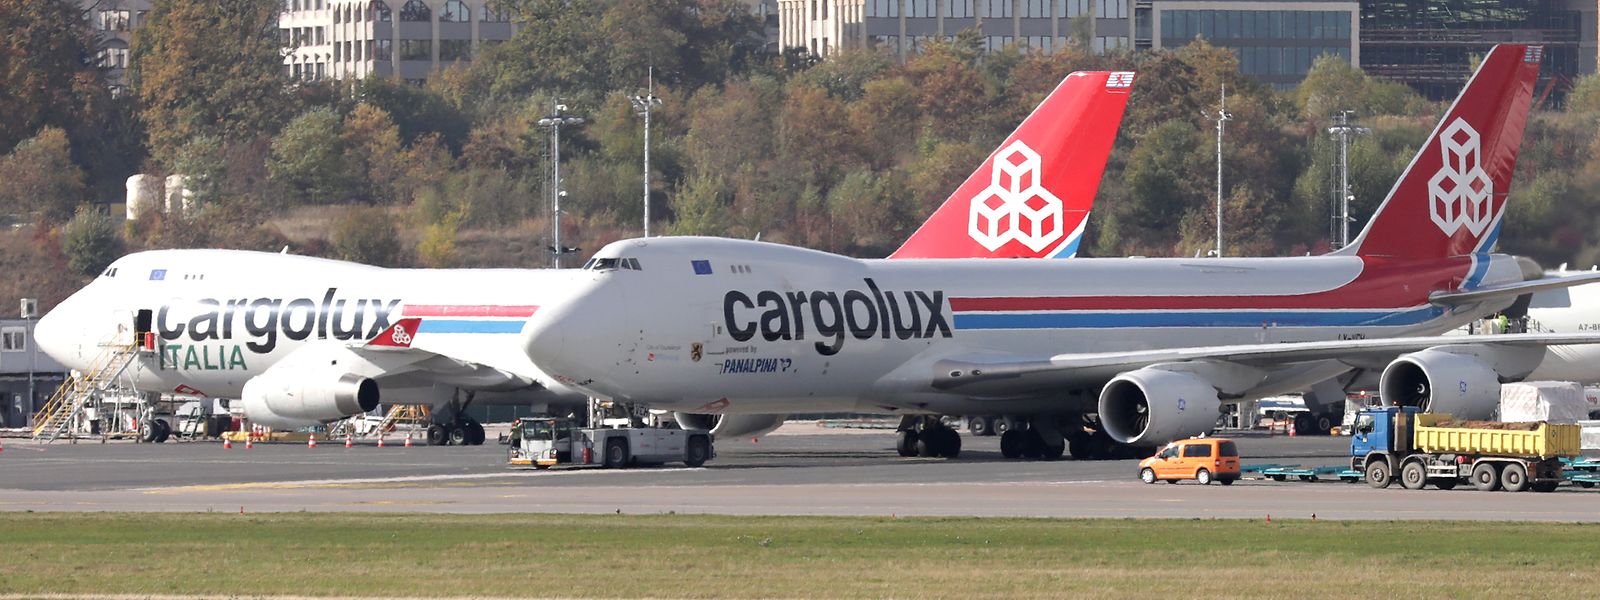 Cargolux recommande à son personnel un maximum de vigilance. 